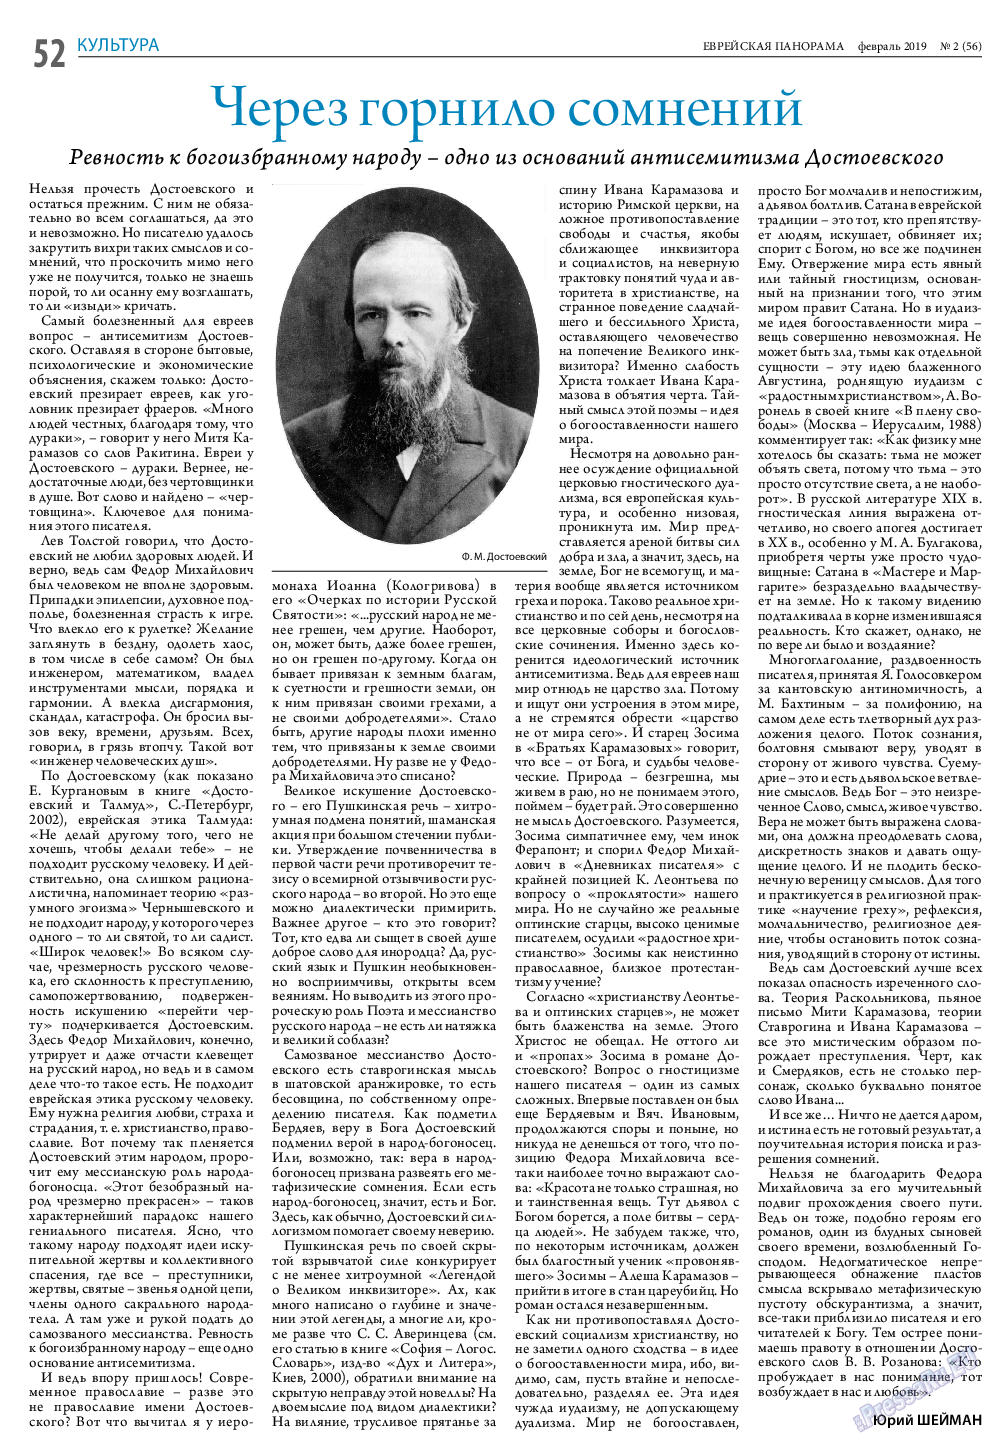 Еврейская панорама, газета. 2019 №2 стр.52